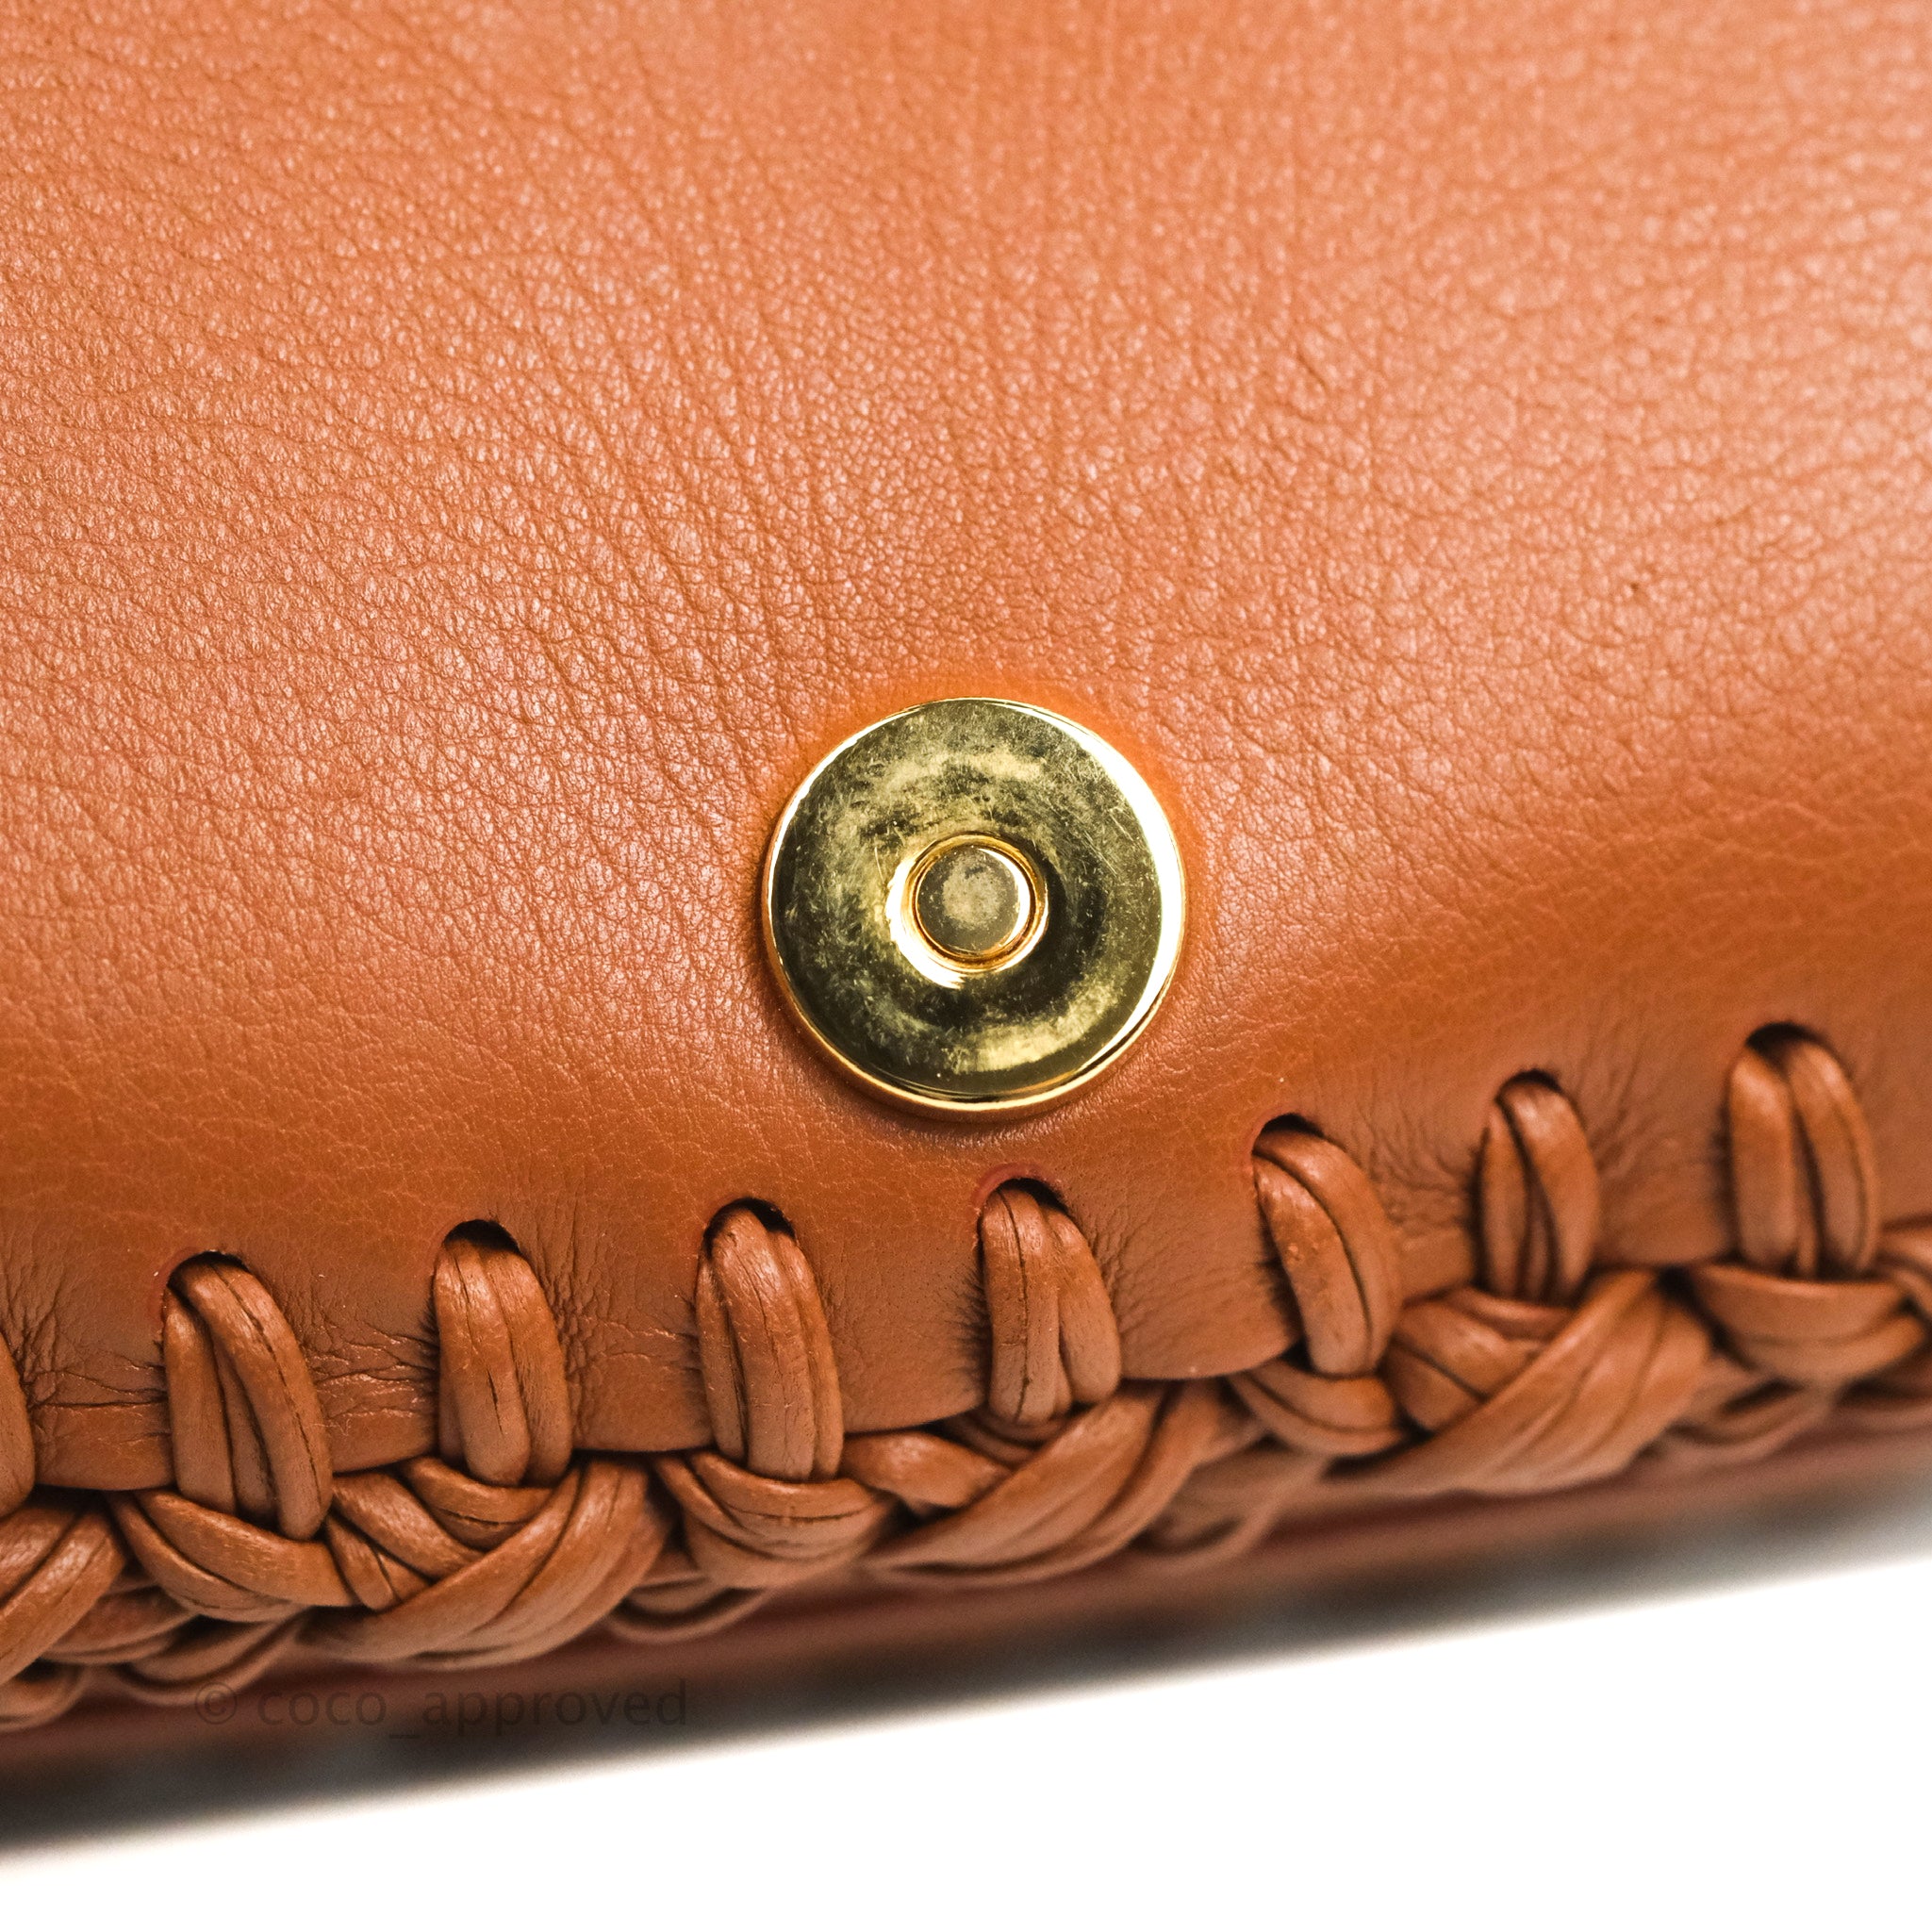 Dior Medium Bobby Bag Camel Calfskin Gold Hardware – Coco Approved